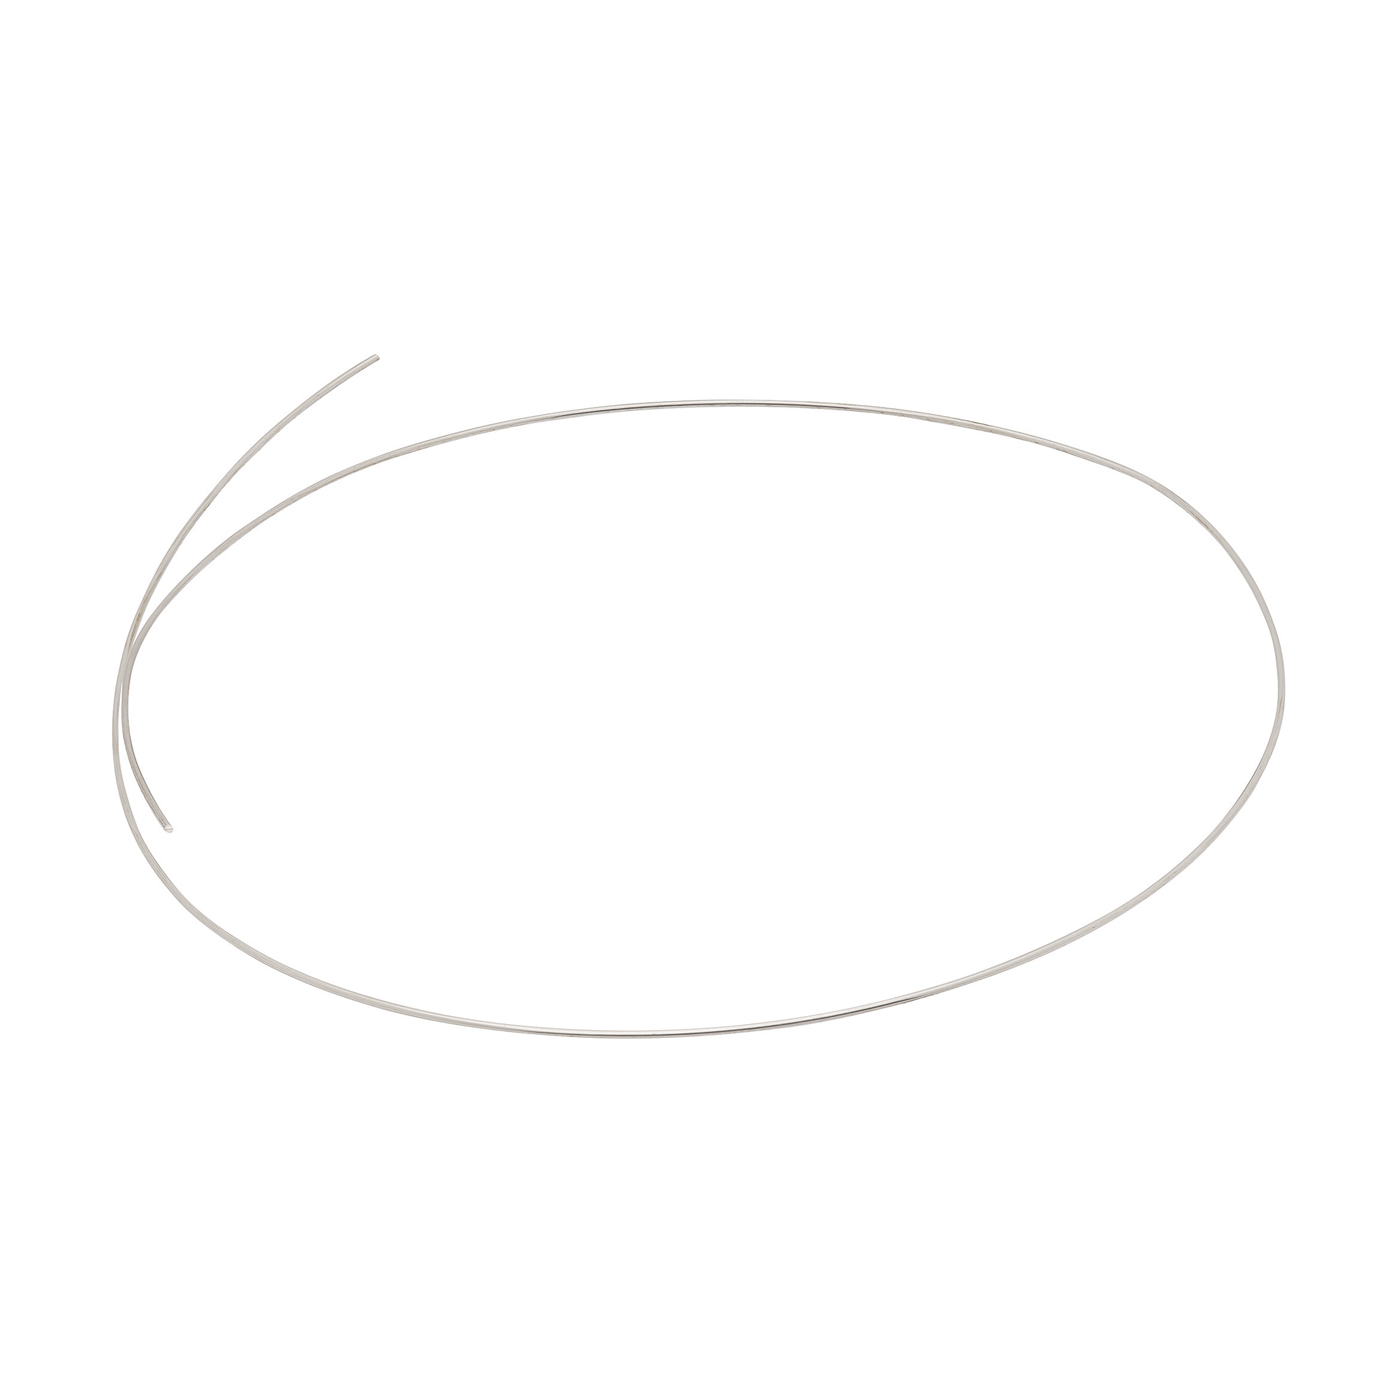 Round Wire, 925Ag, ø 1 mm, Length 50 cm - 1 piece